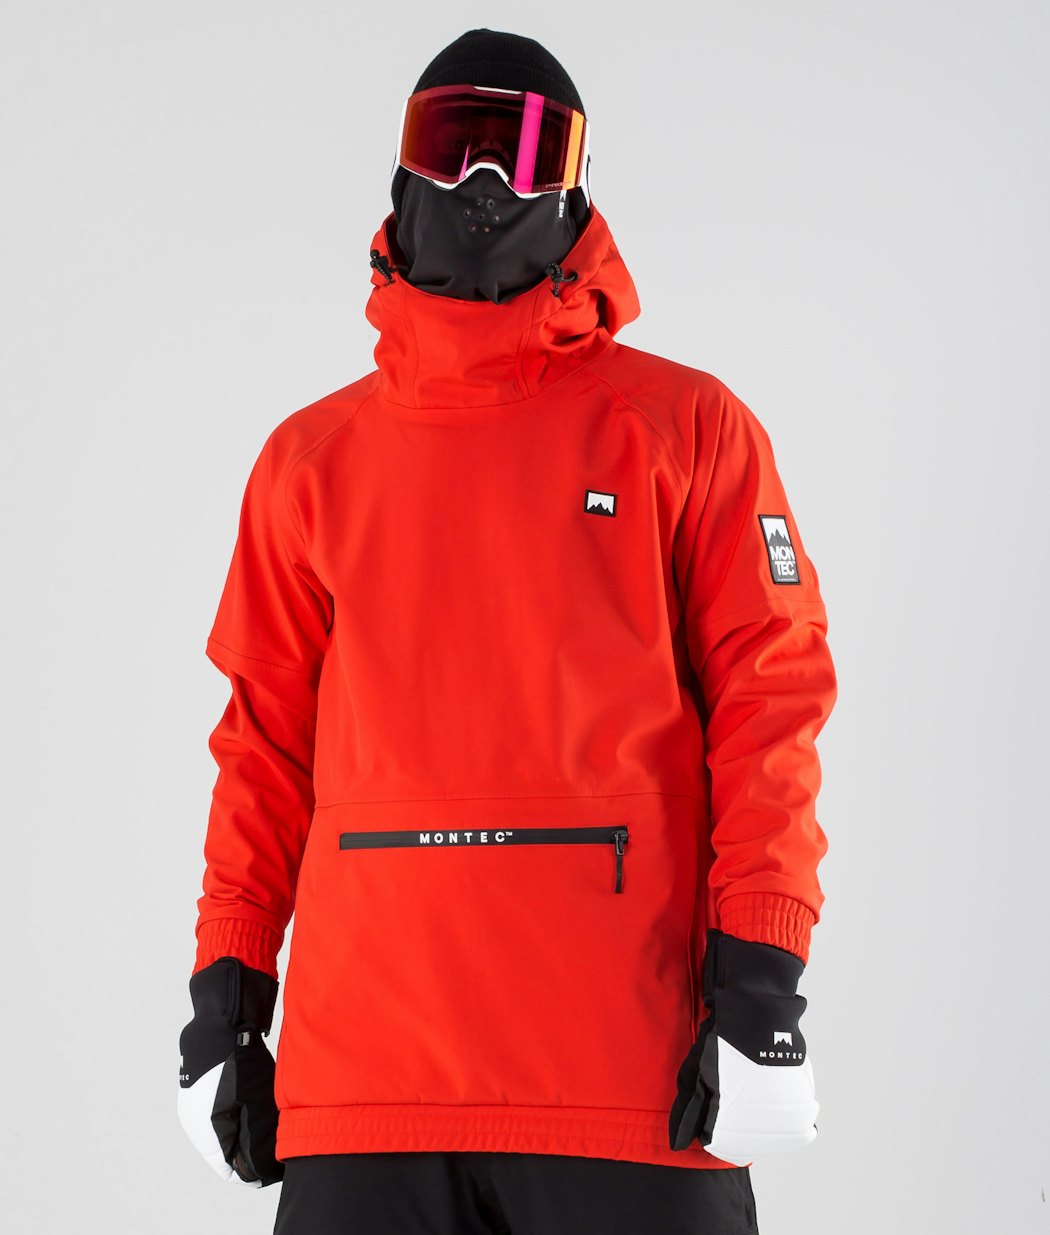 Tempest 2019 Snowboard Jacket Men Red Renewed